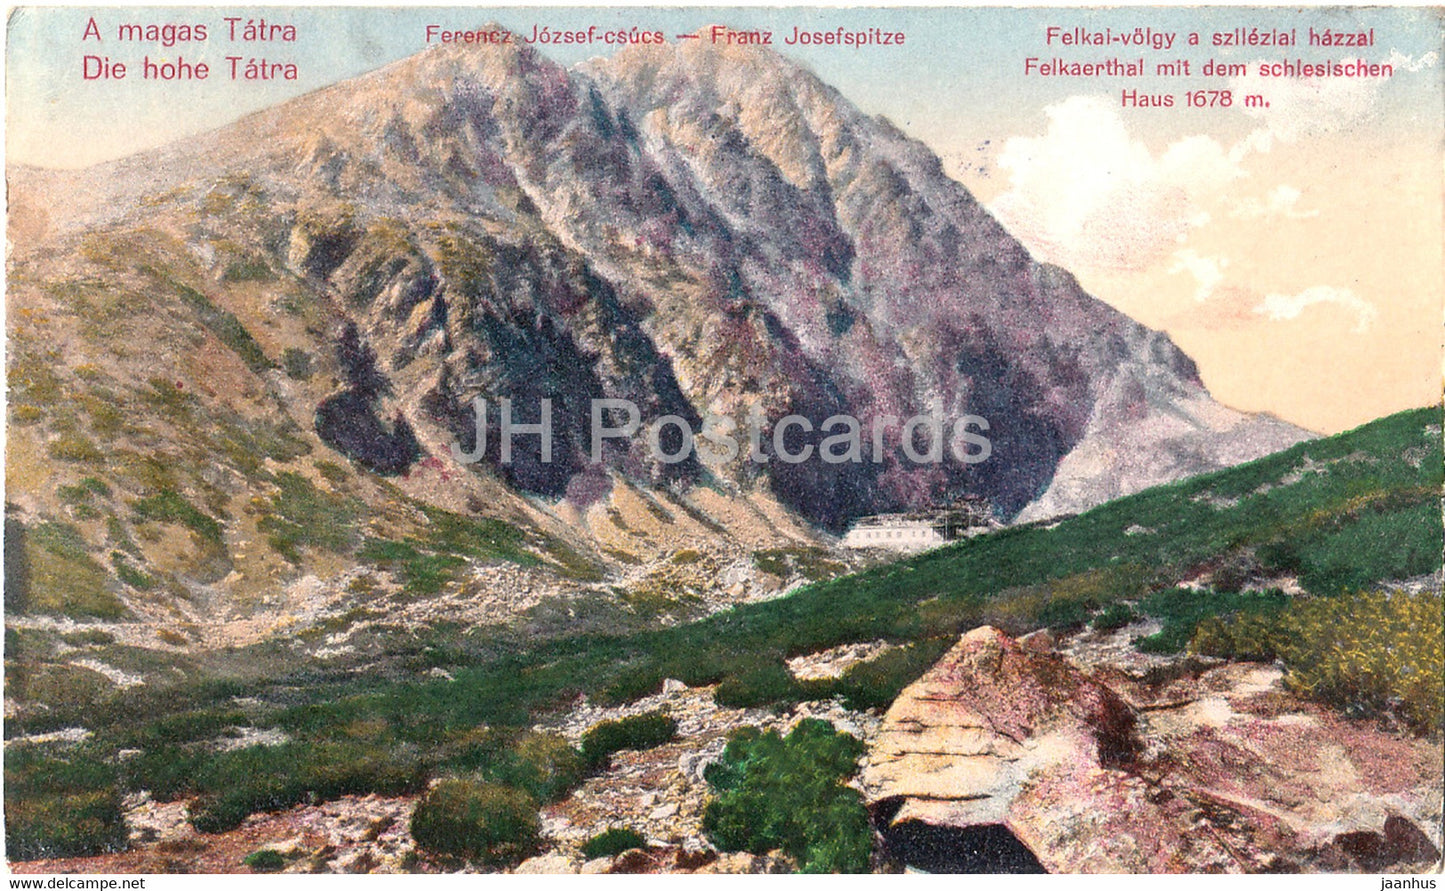 A Magas Tatra - Die Hohe Tatra - Ferencz Jozsef csucs - Franz Josepfspitse - old postcard - 1913 - Slovakia - used - JH Postcards